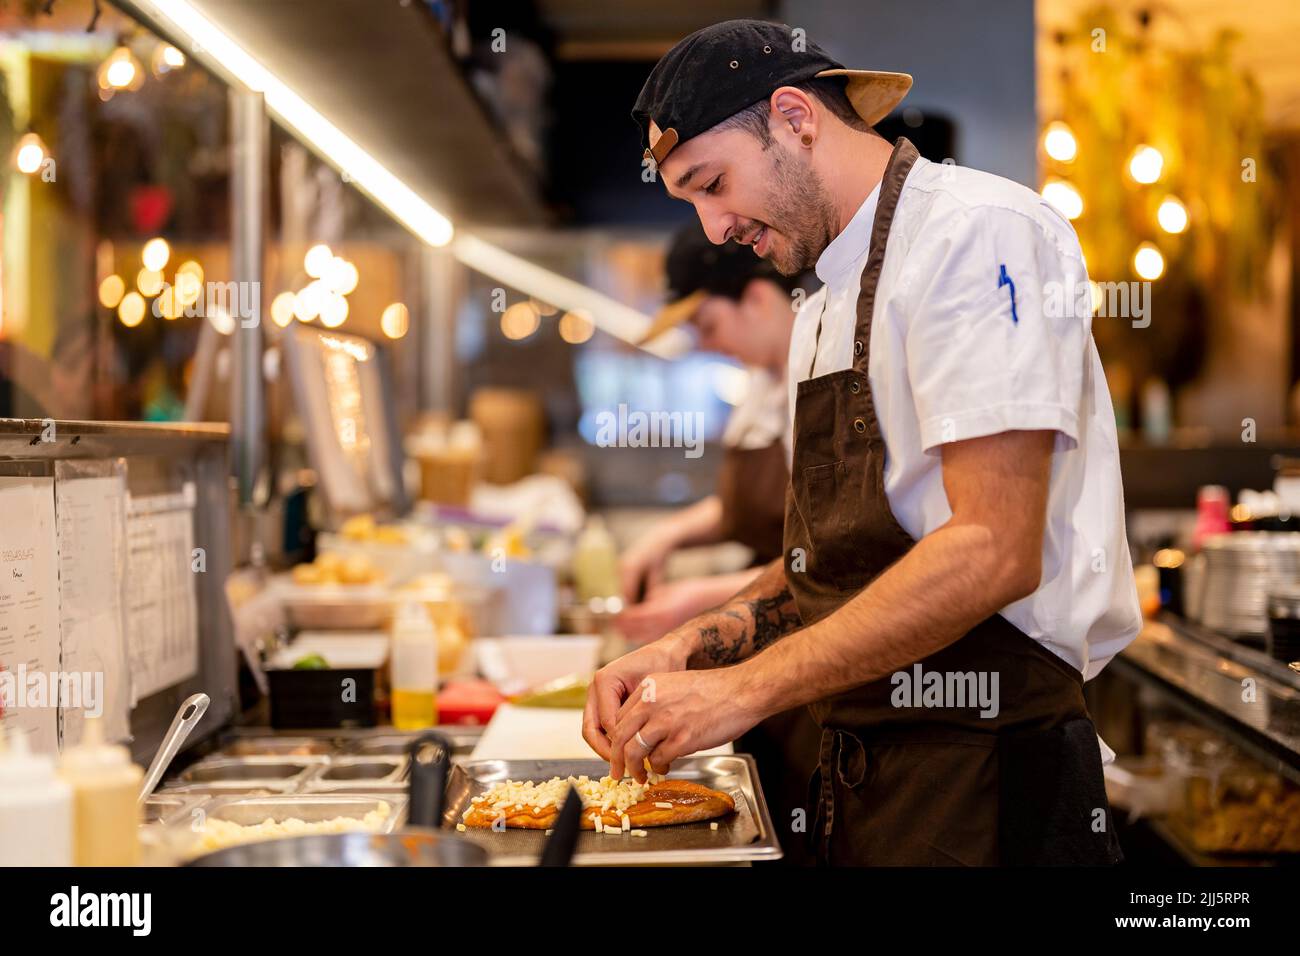 Smiling man preparing food at restaurant kitchen Stock Photo